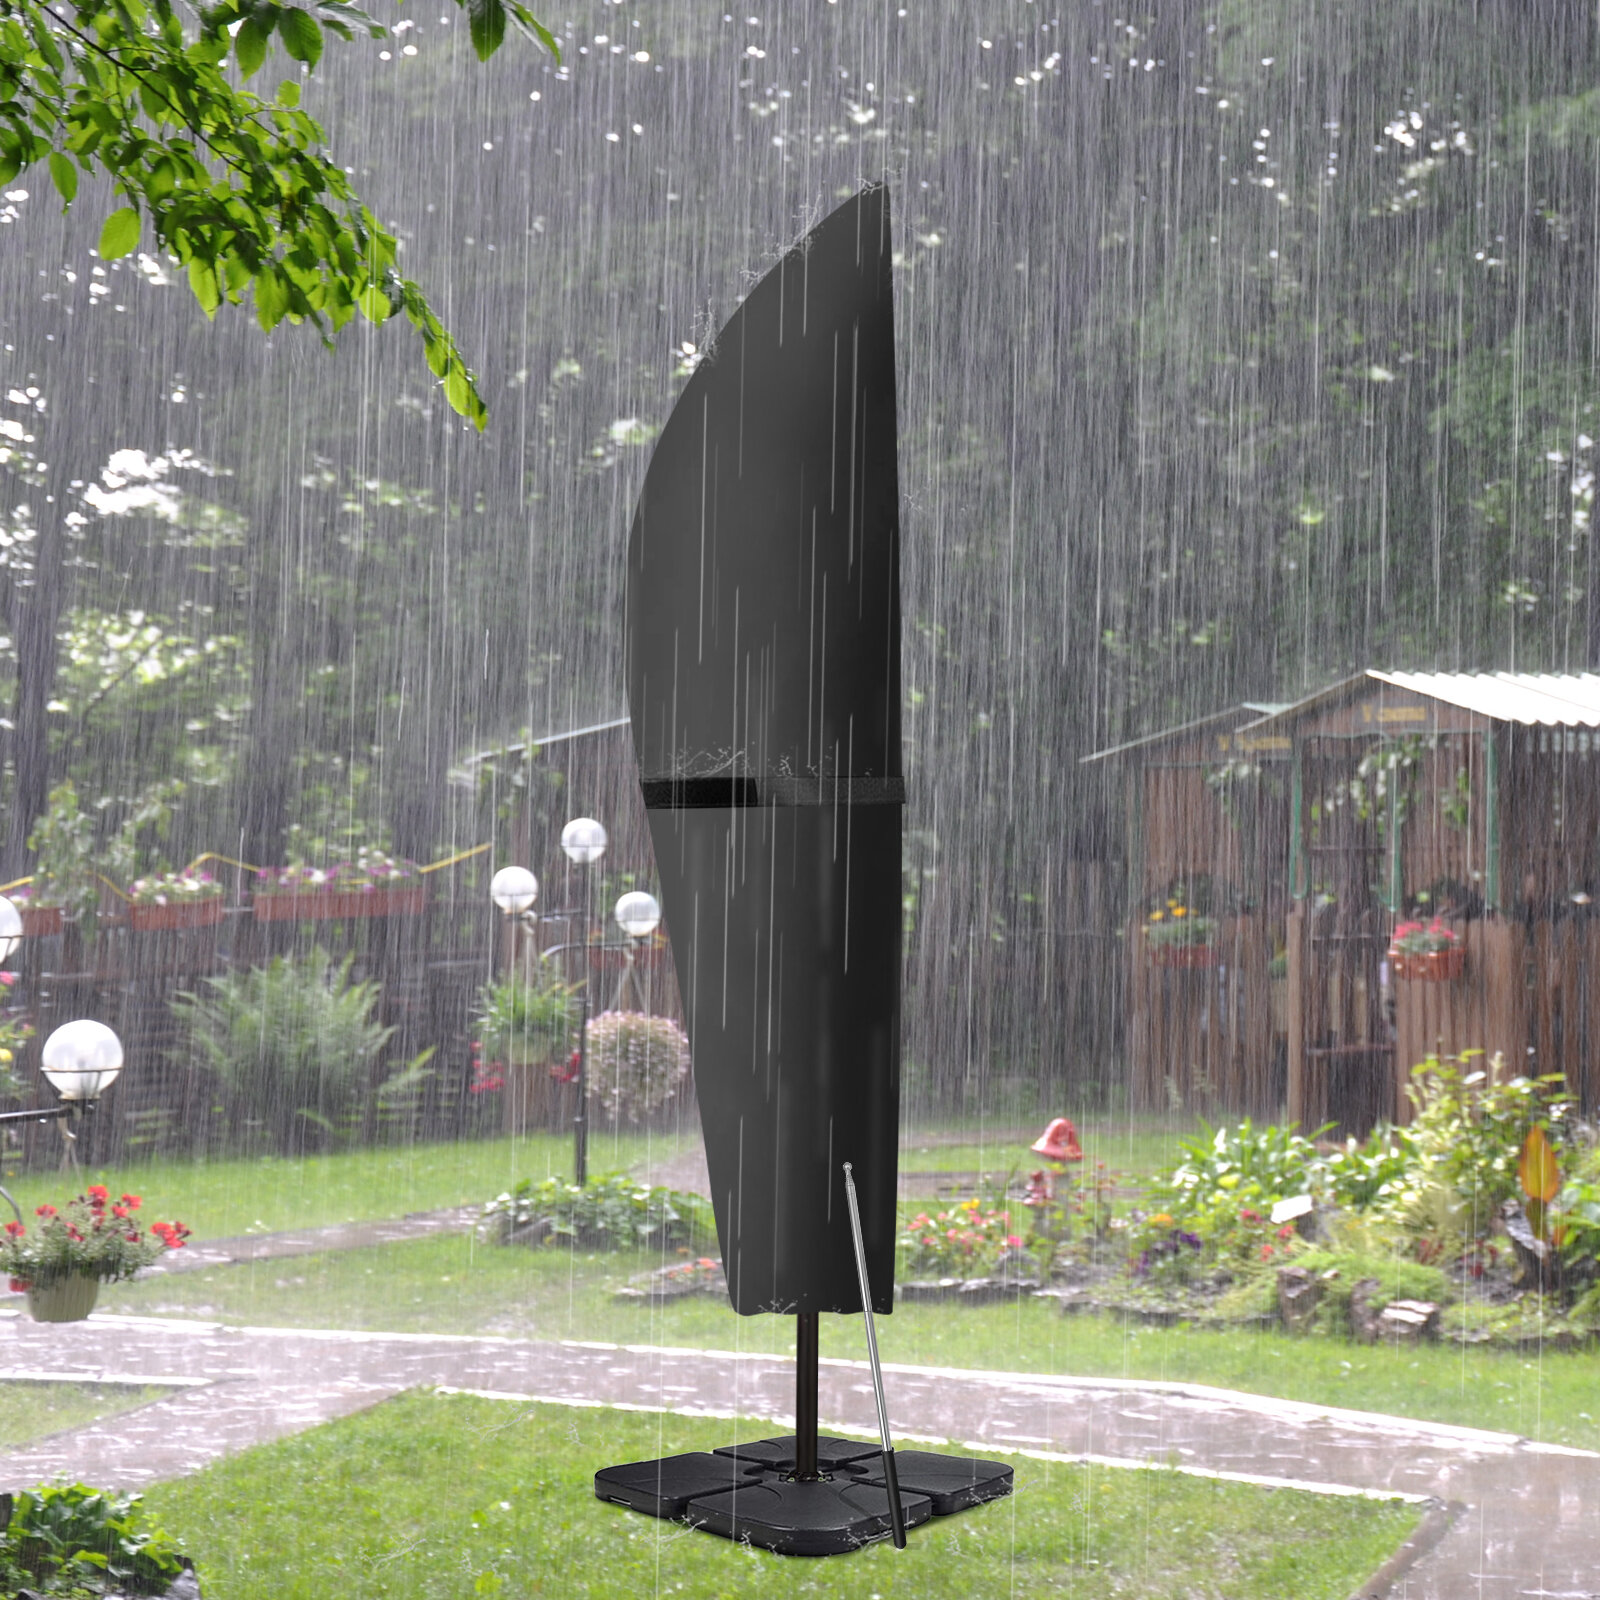 KING DO WAY Outdoor Umbrella Cover 420D Oxford Cloth Anti-fading Waterproof Umbrella Cover